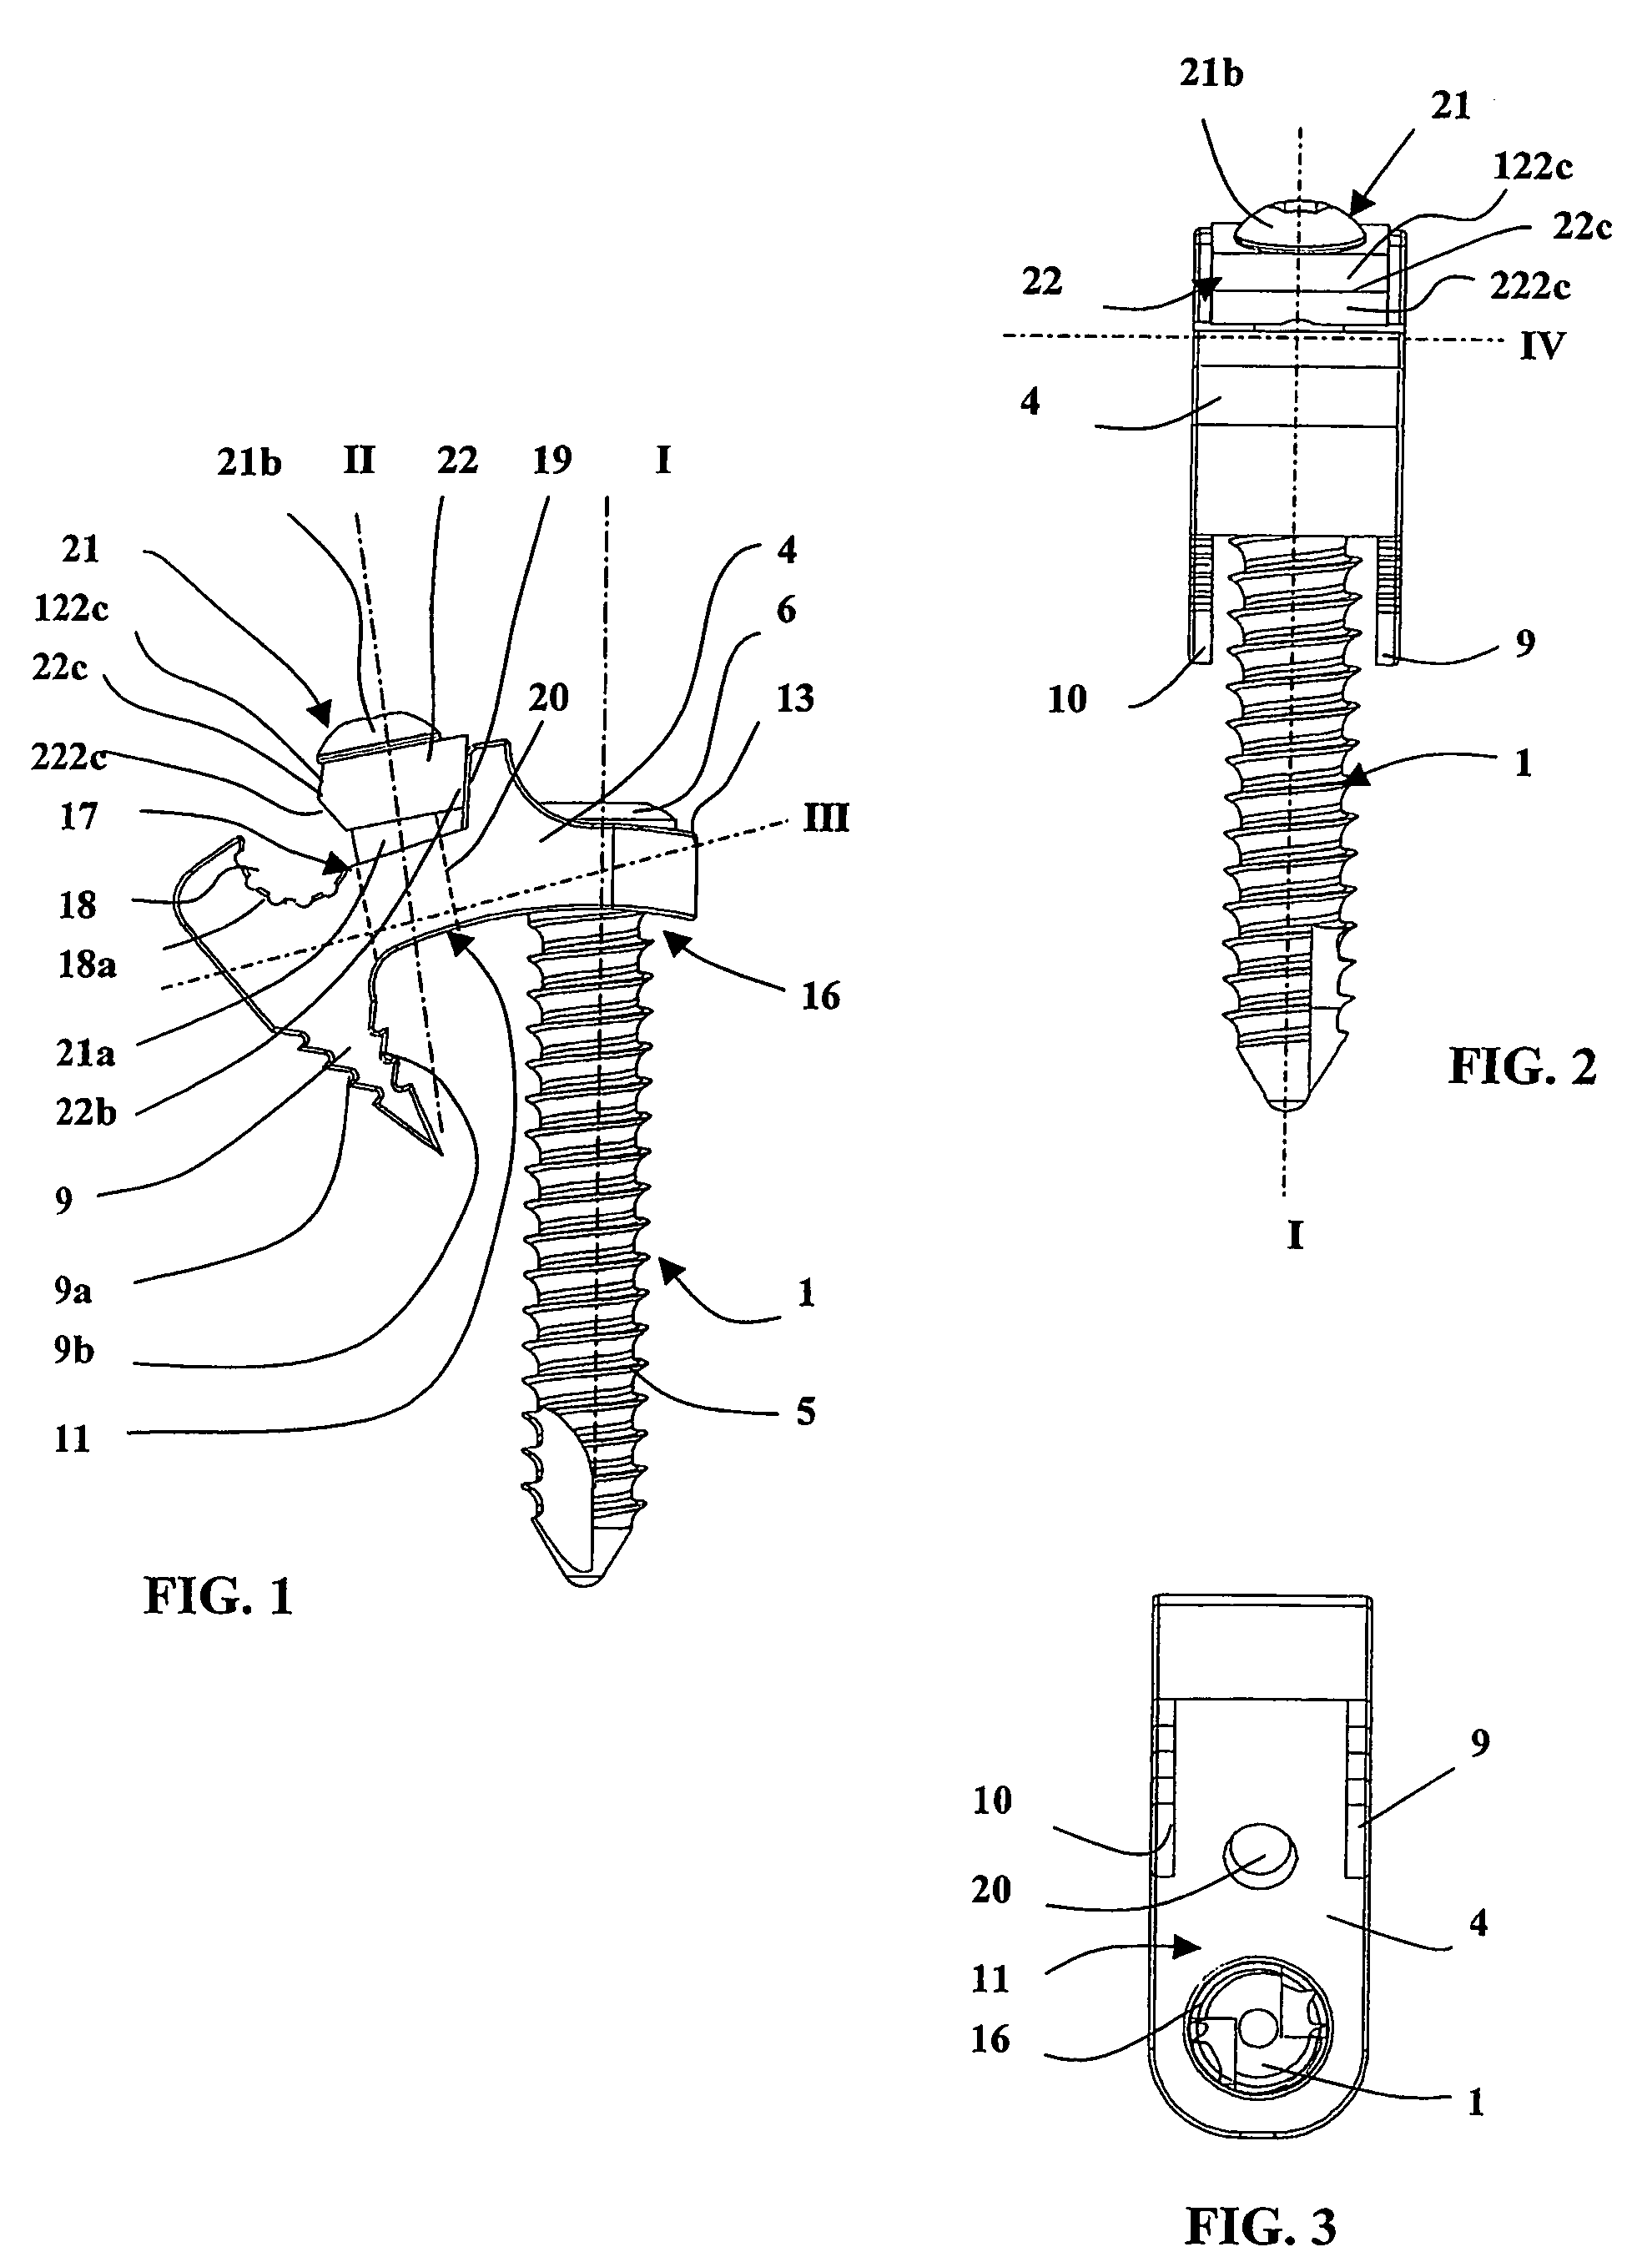 Device comprising anterior plate for vertebral column support